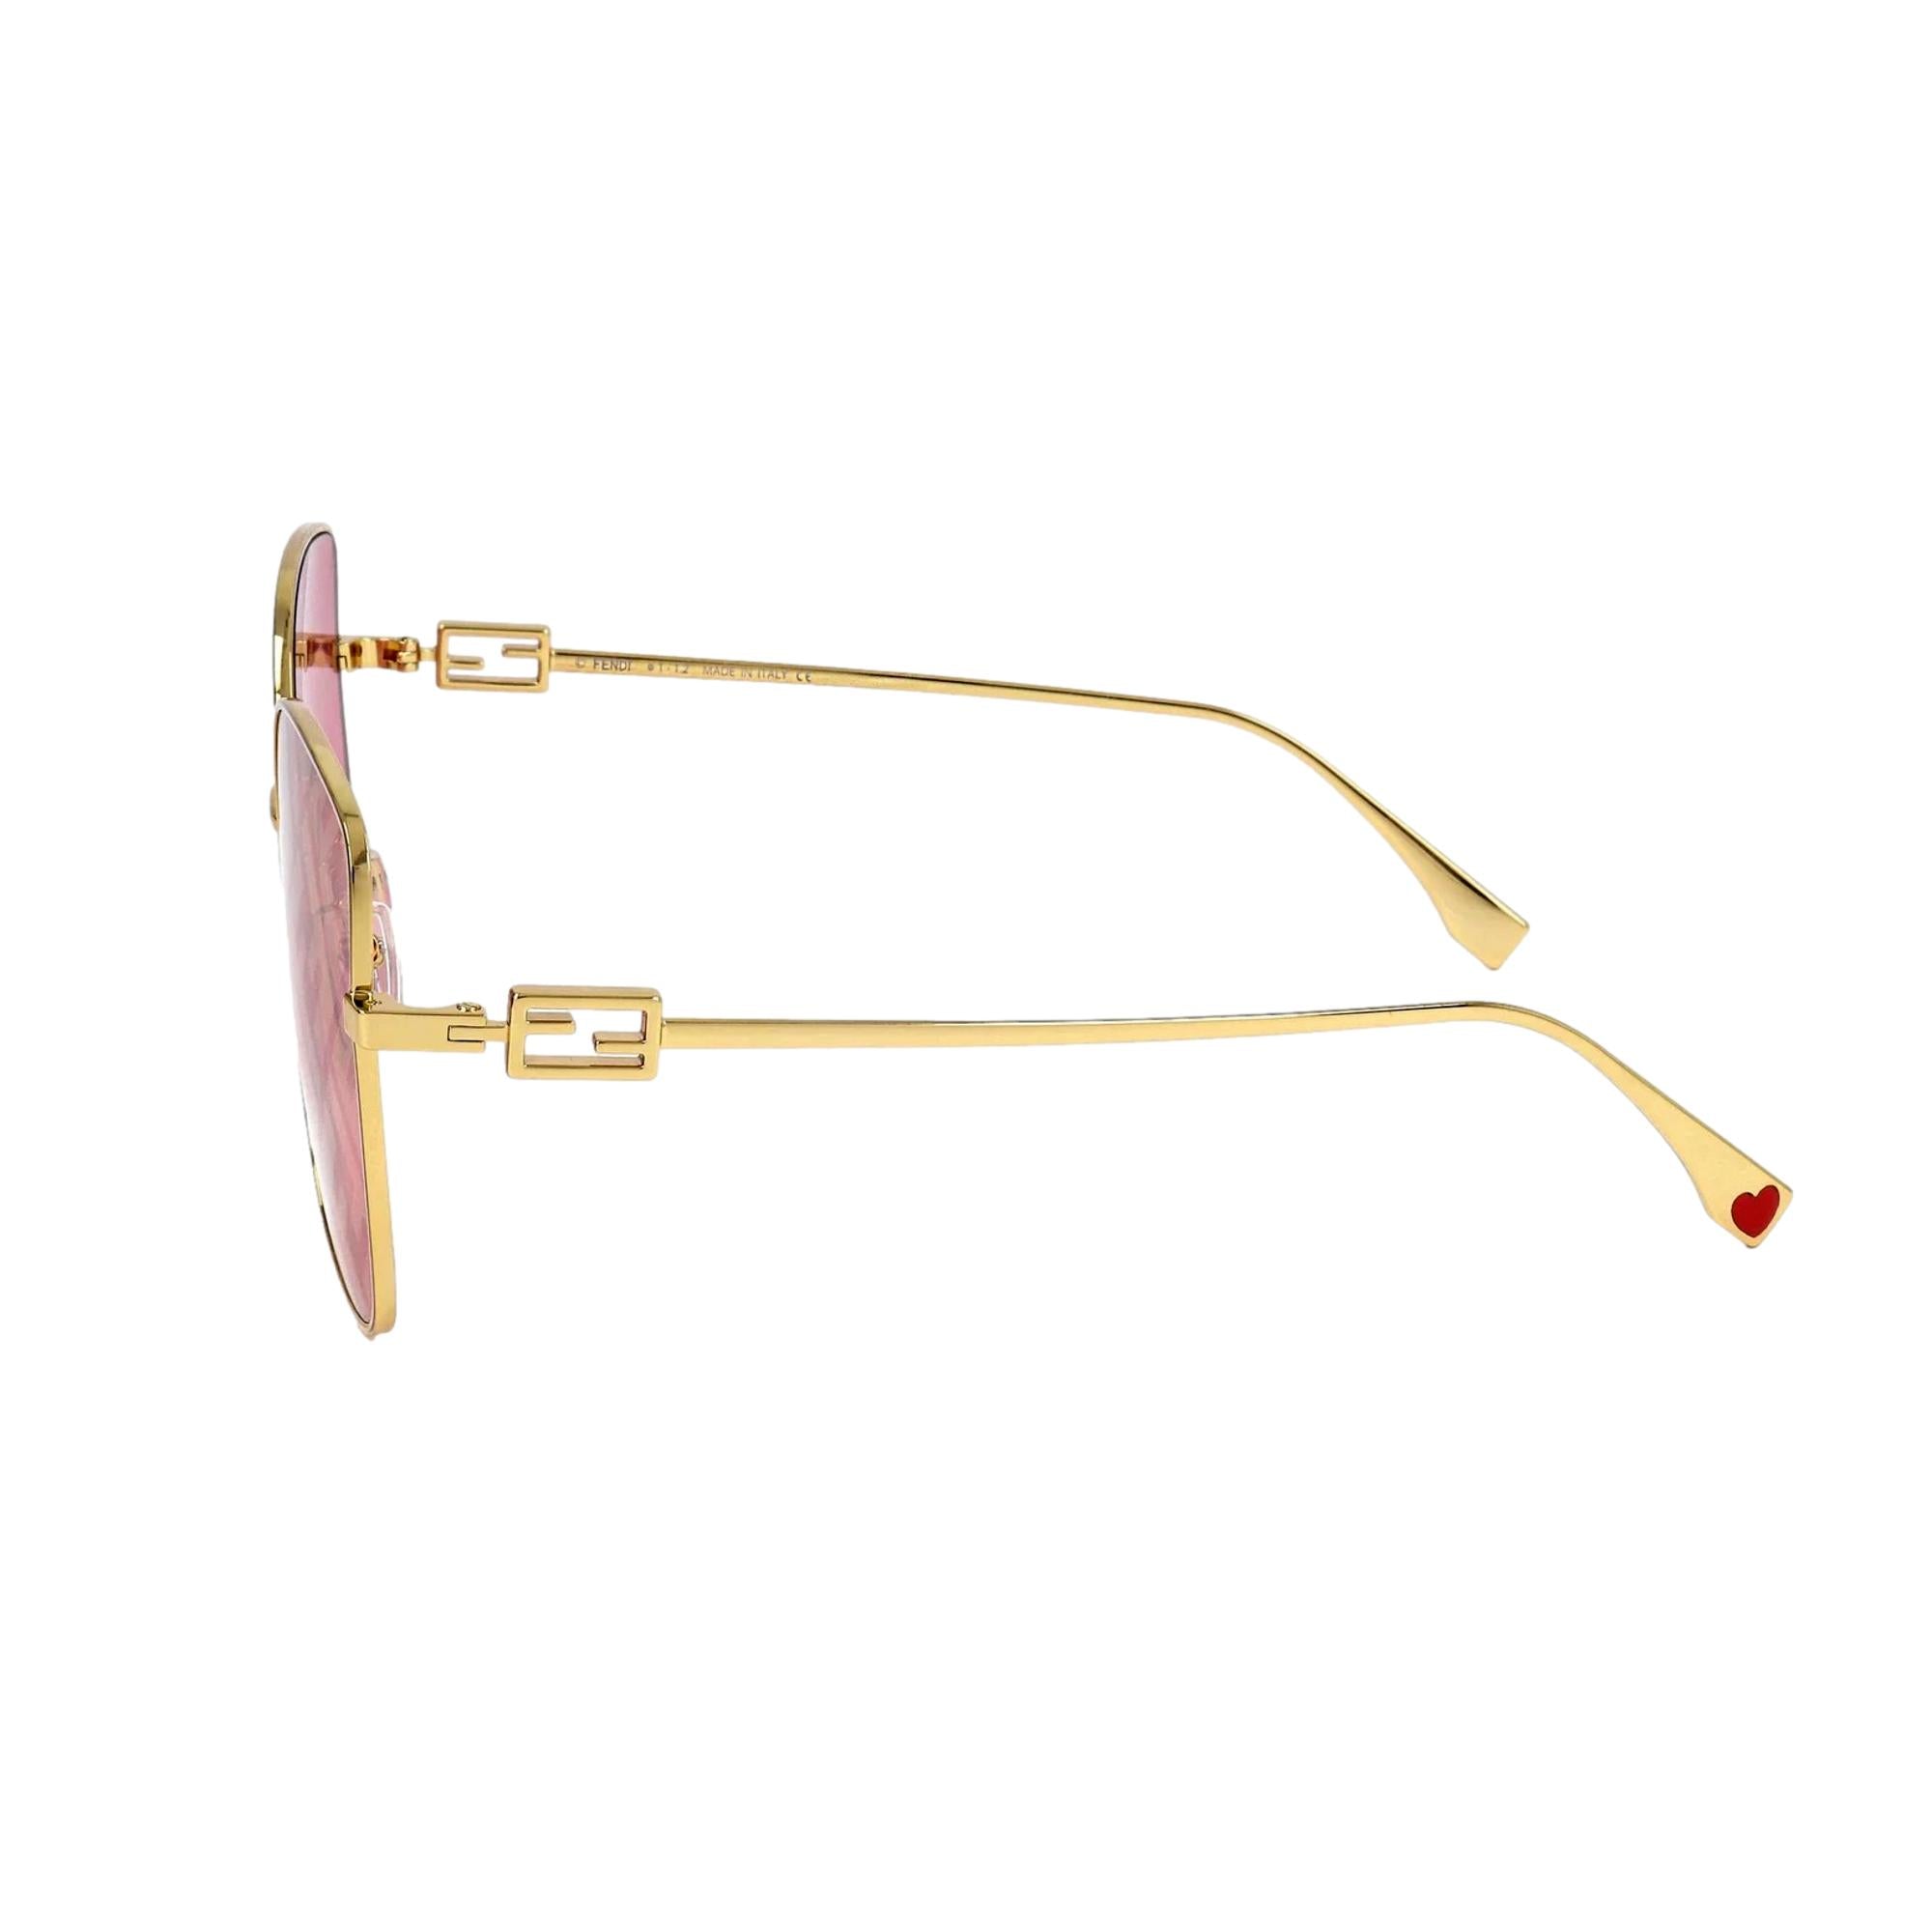 Fendi Baguette Pink FF Print Lenses Gold Square Frame Sunglasses